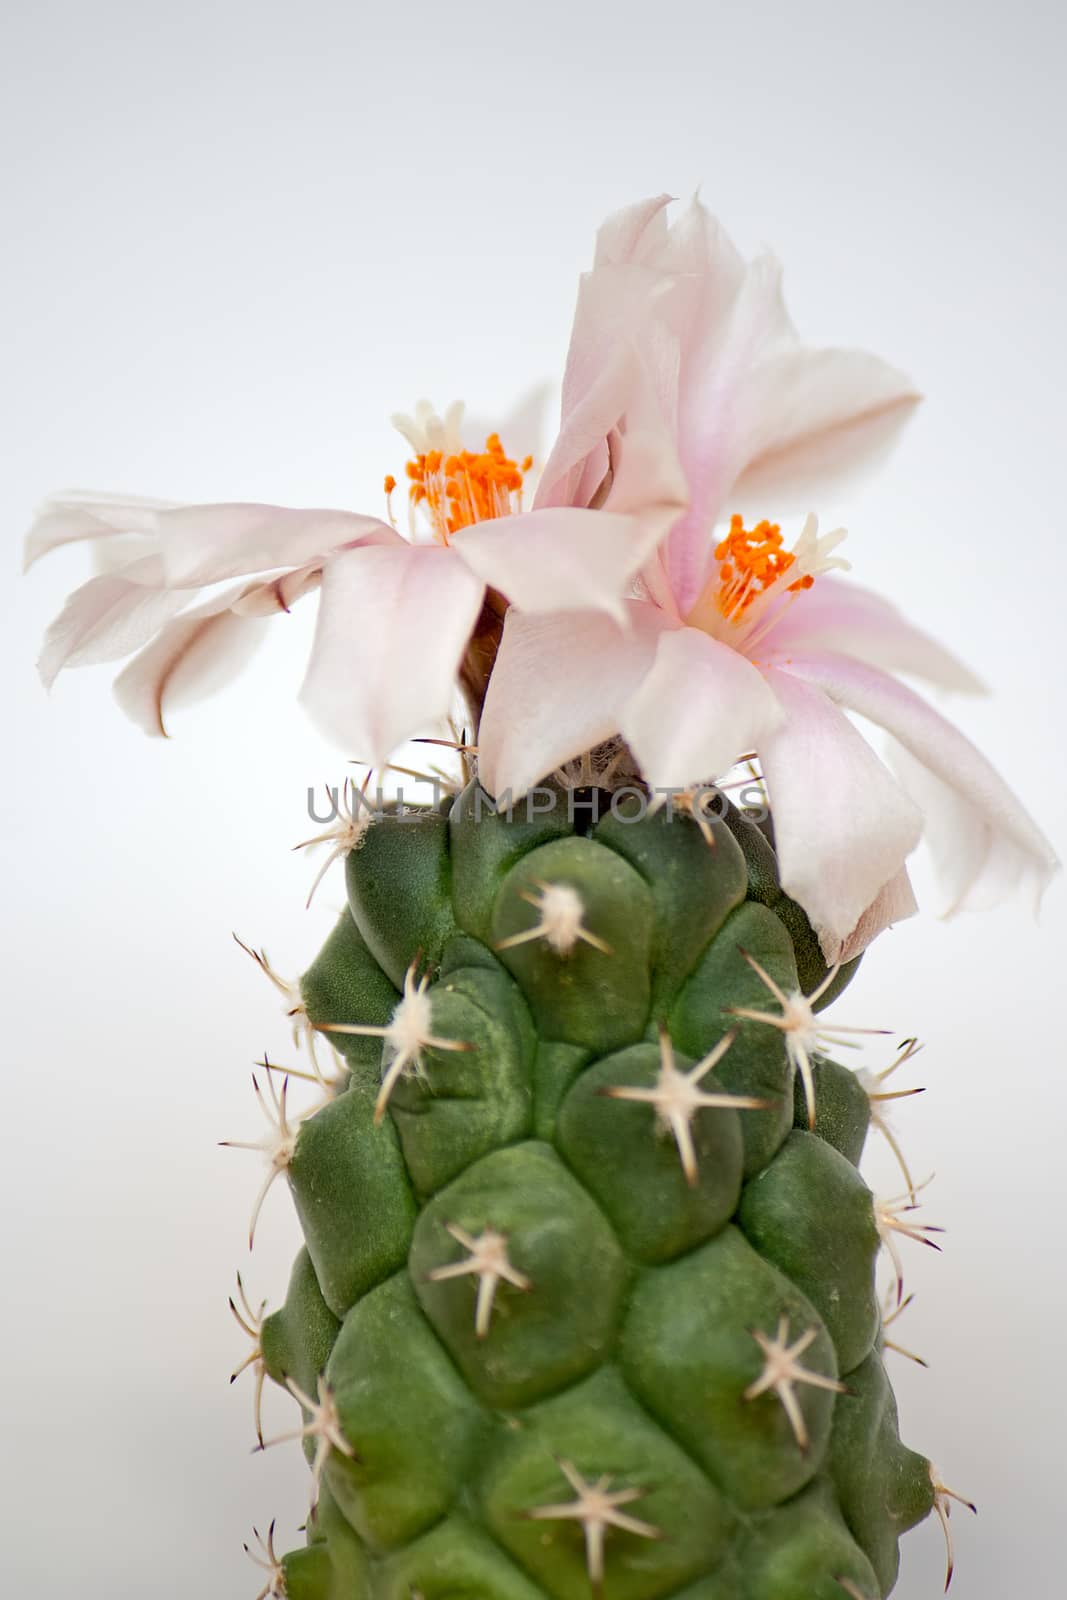 cactus flowers by zhannaprokopeva